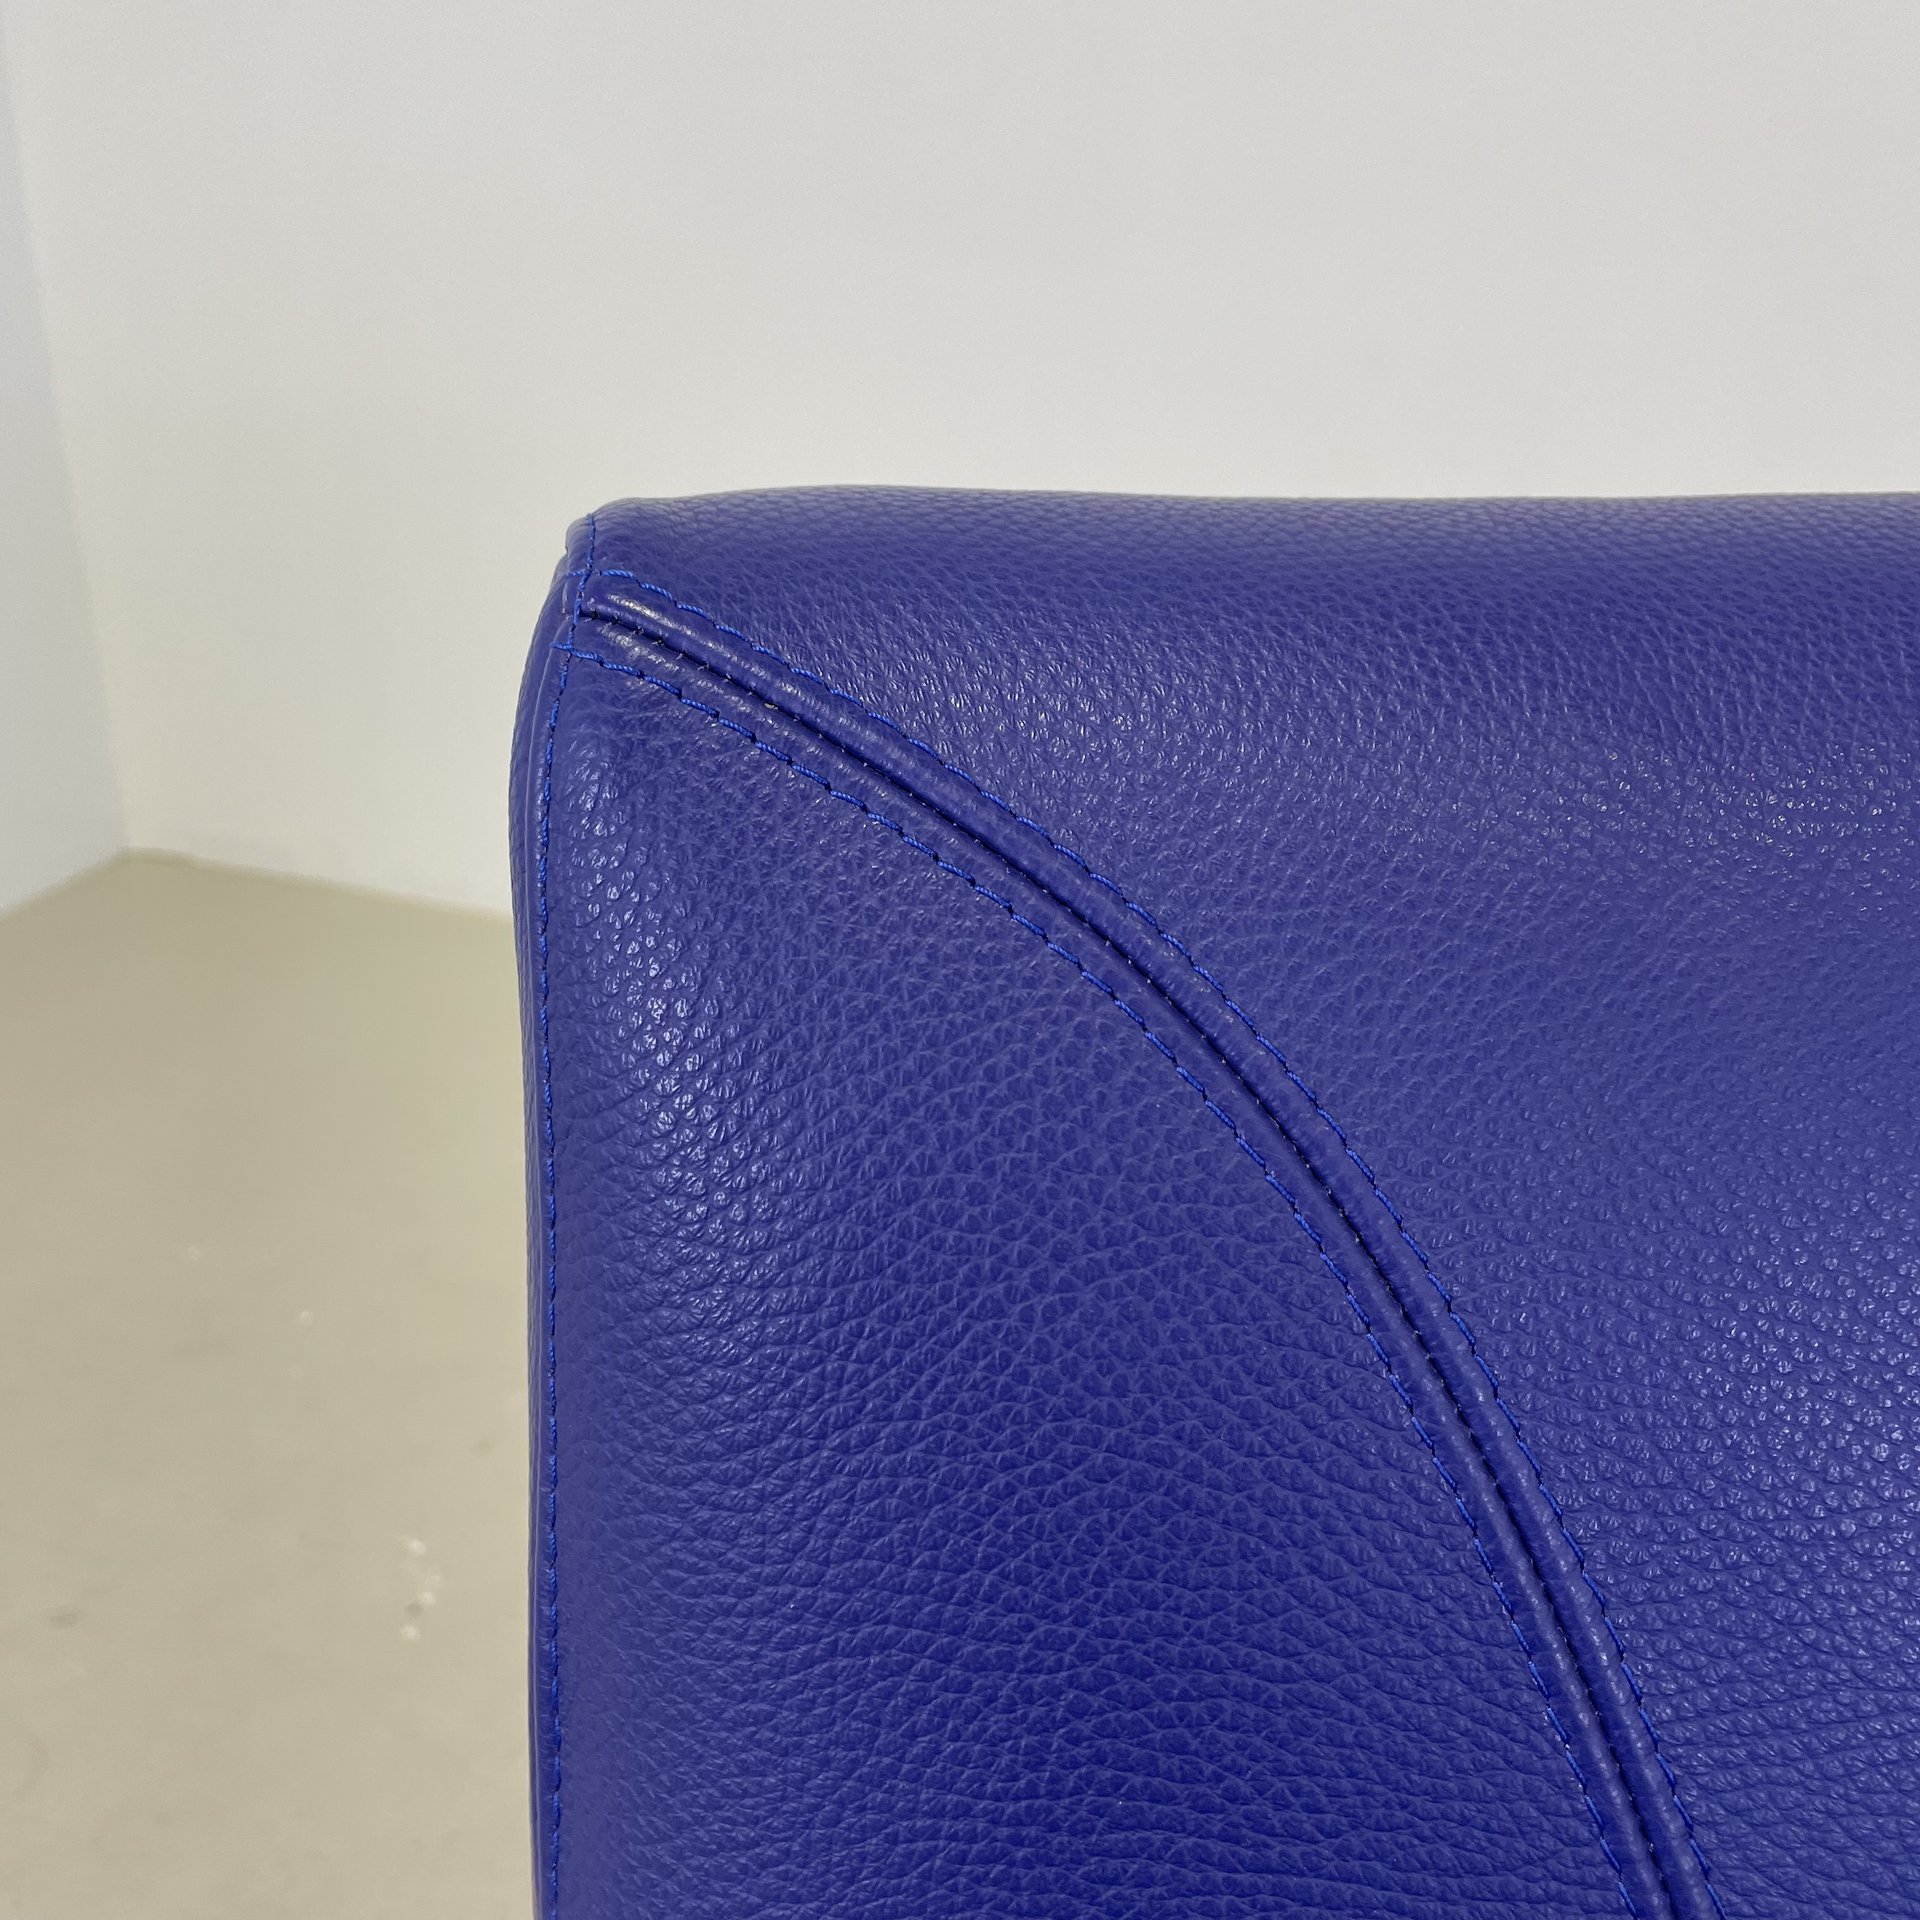 Leolux Dolcinea armchair blue, € 1,050